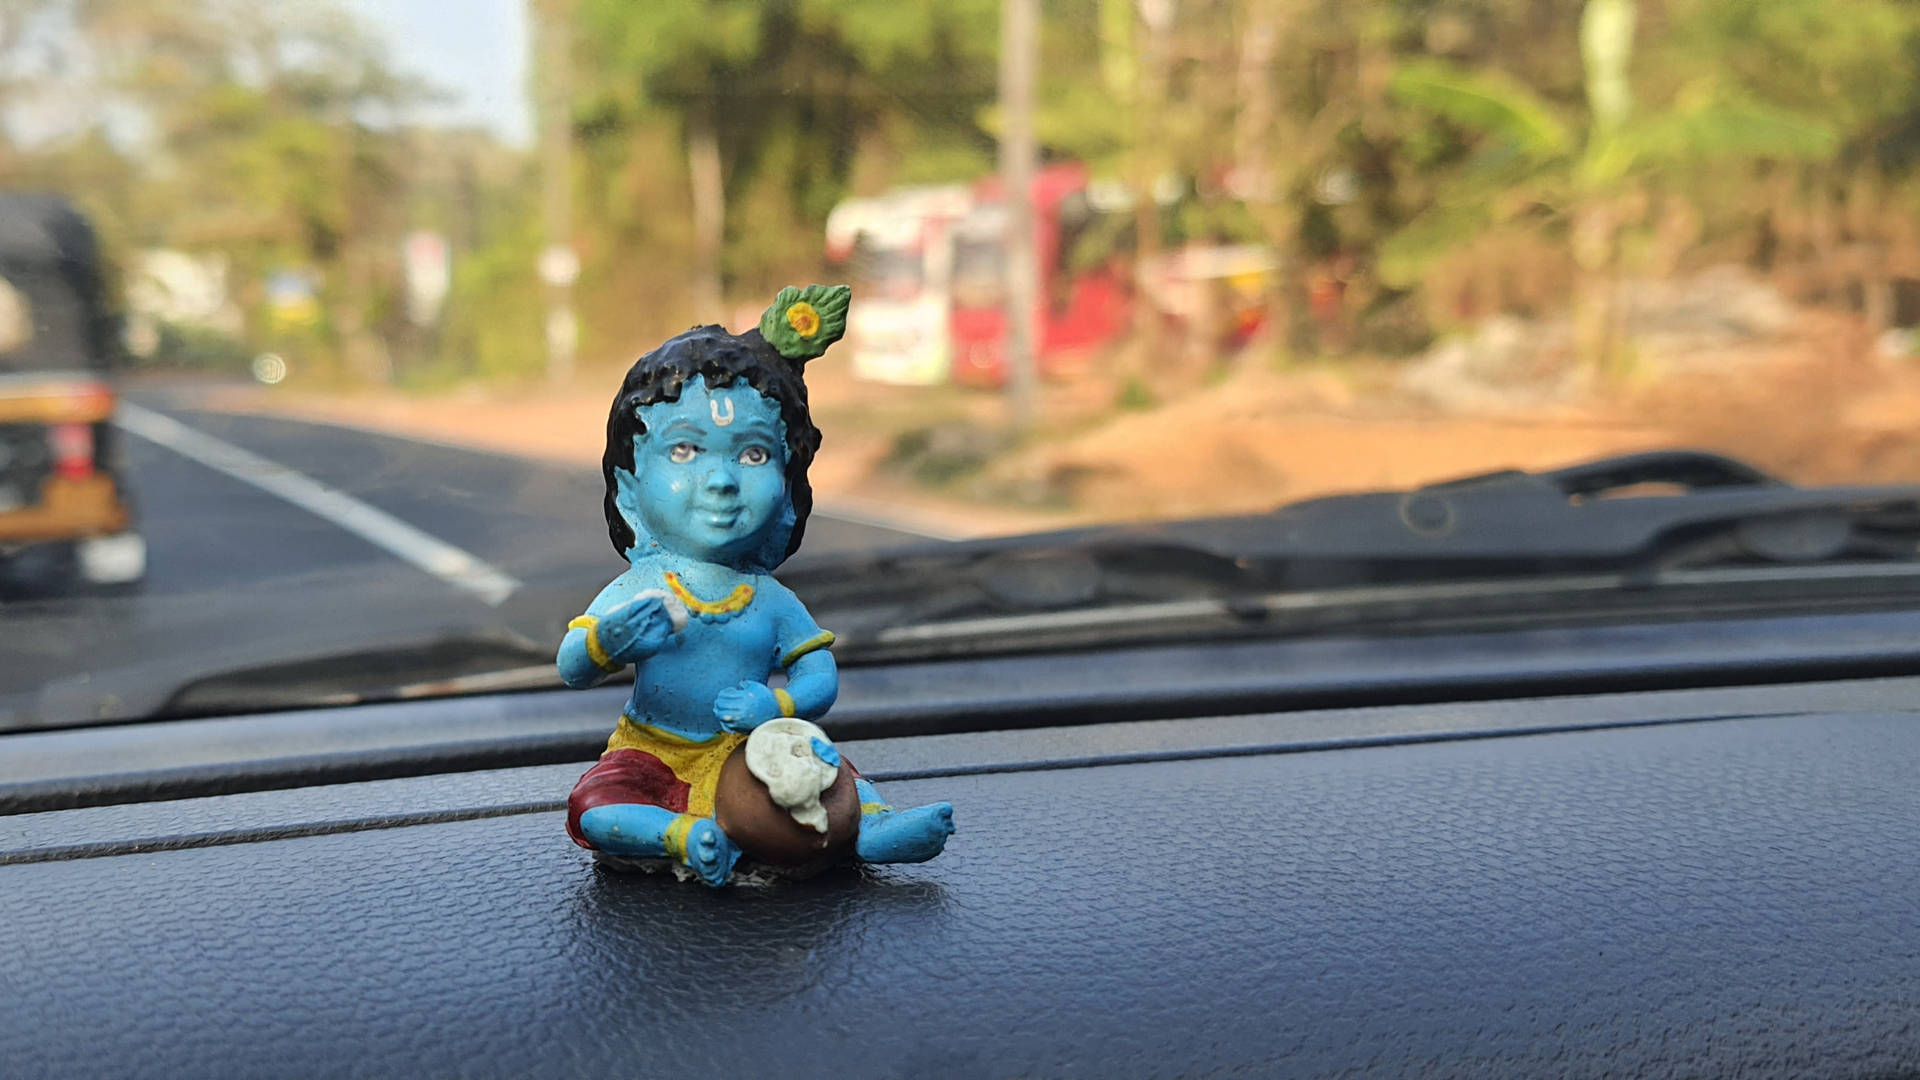 Figurine Of Baby Krishna 4k